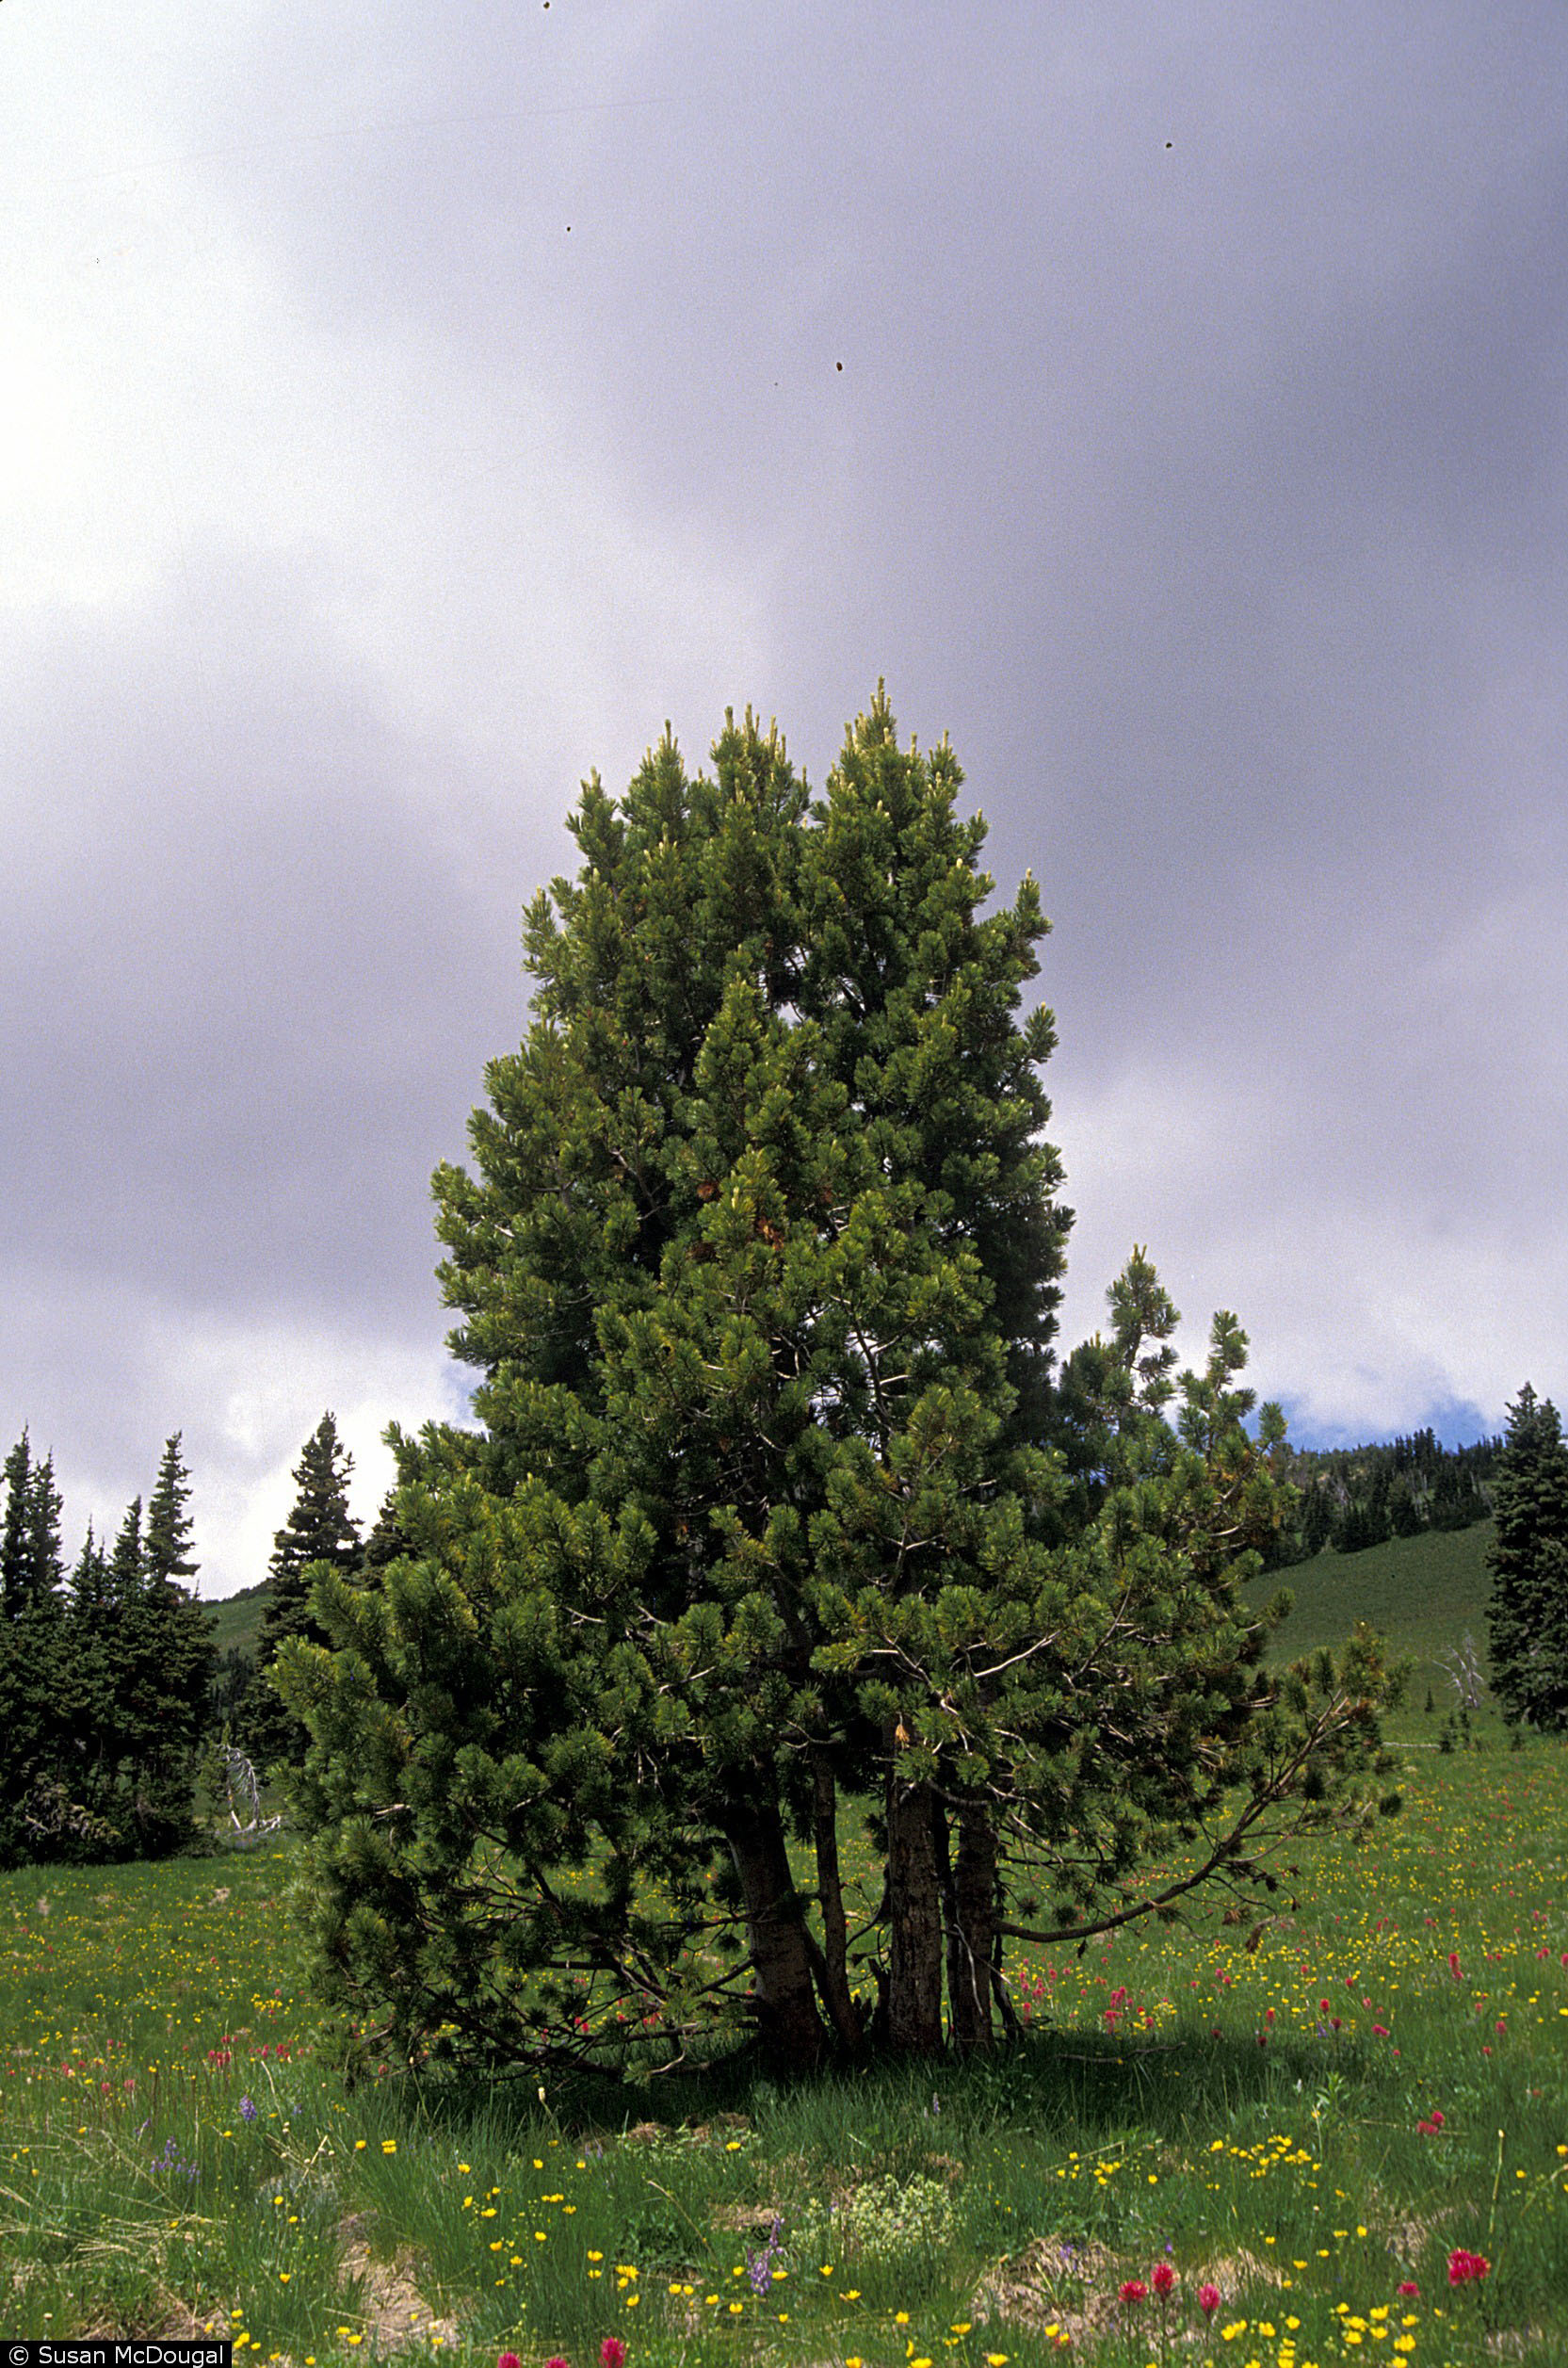 Pinus albicaulis whitebark pine trees